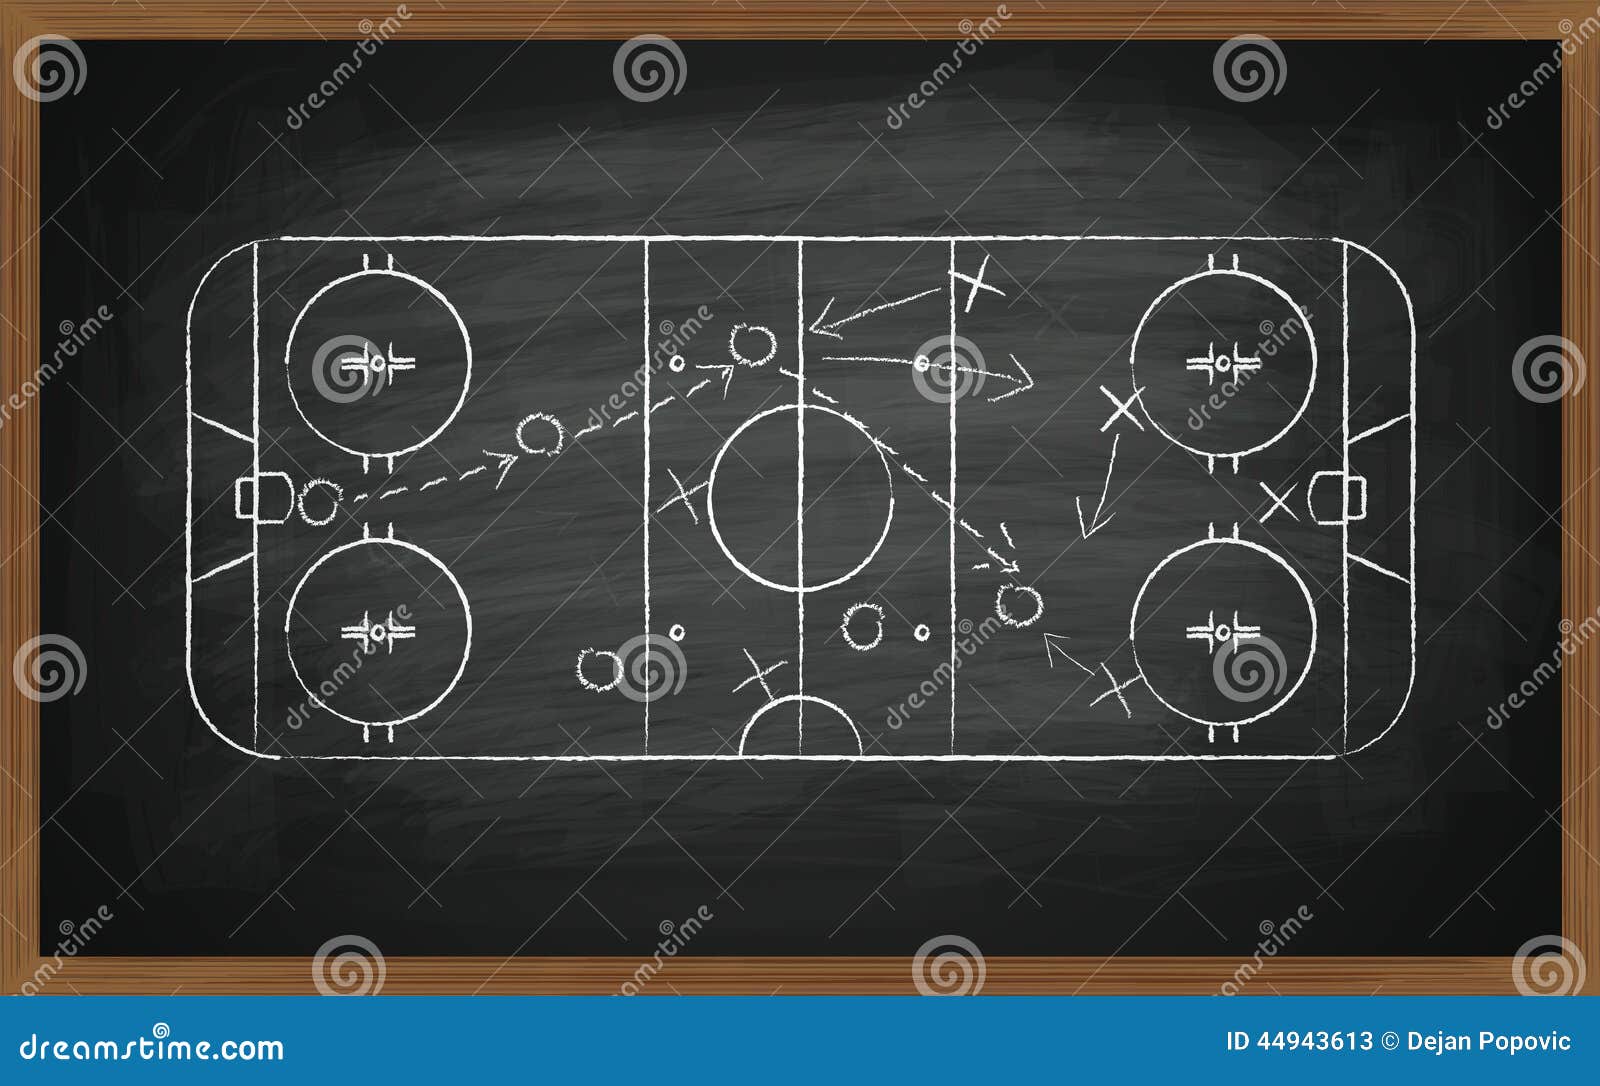 Hockey Tactic On Board Stock Illustration. Illustration Of Defending -  44943613